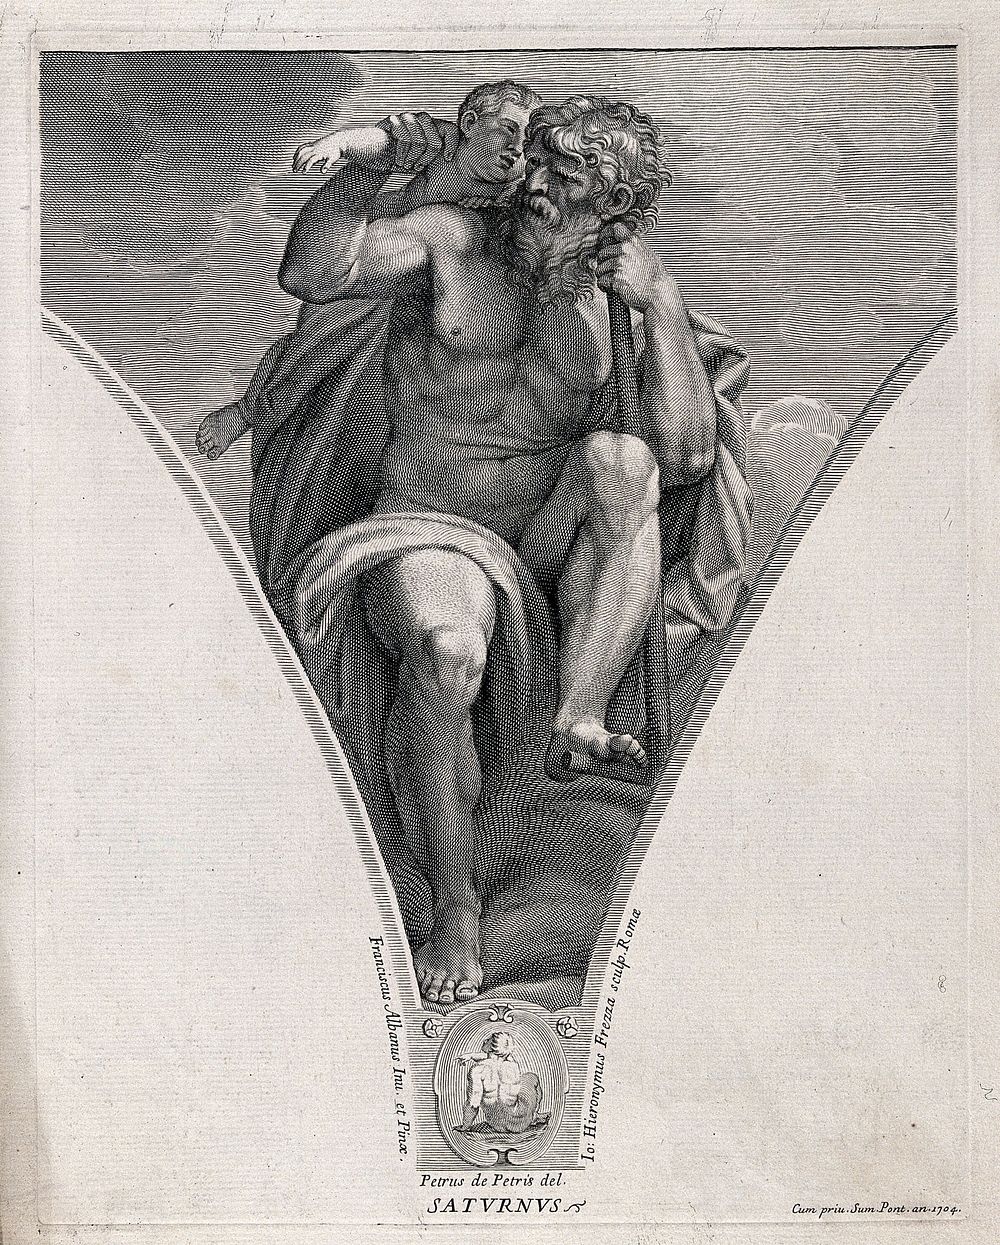 Saturn [Kronos]. Engraving by G.H. Frezza, 1704, after P. de Petris after F. Albani.